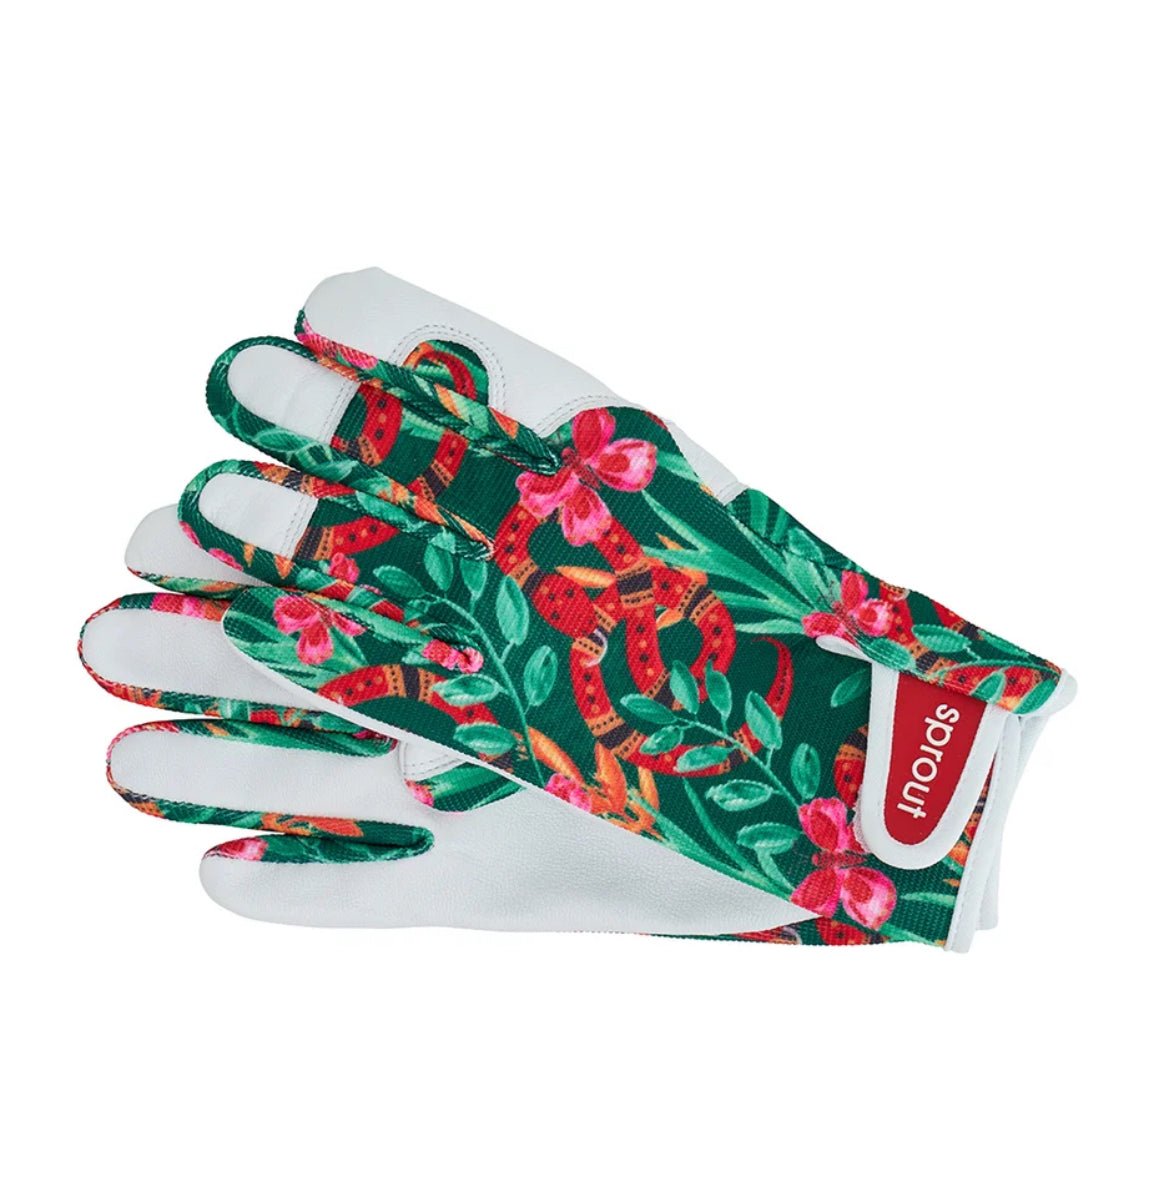 Sprout Garden Gloves - Design - The Flower Crate